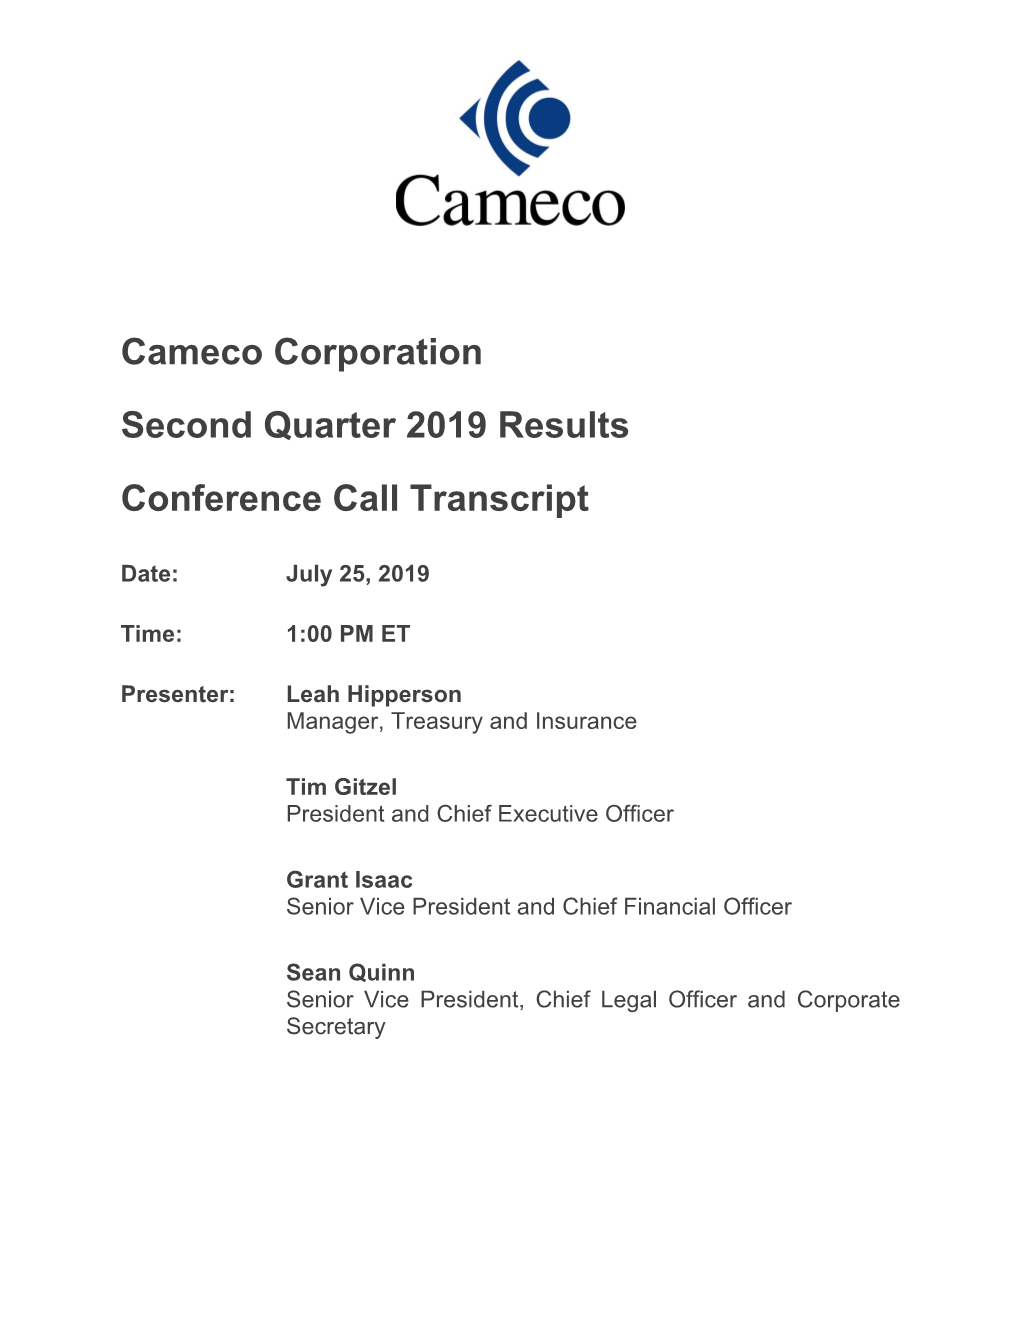 Cameco Corporation Second Quarter 2019 Results Conference Call Transcript